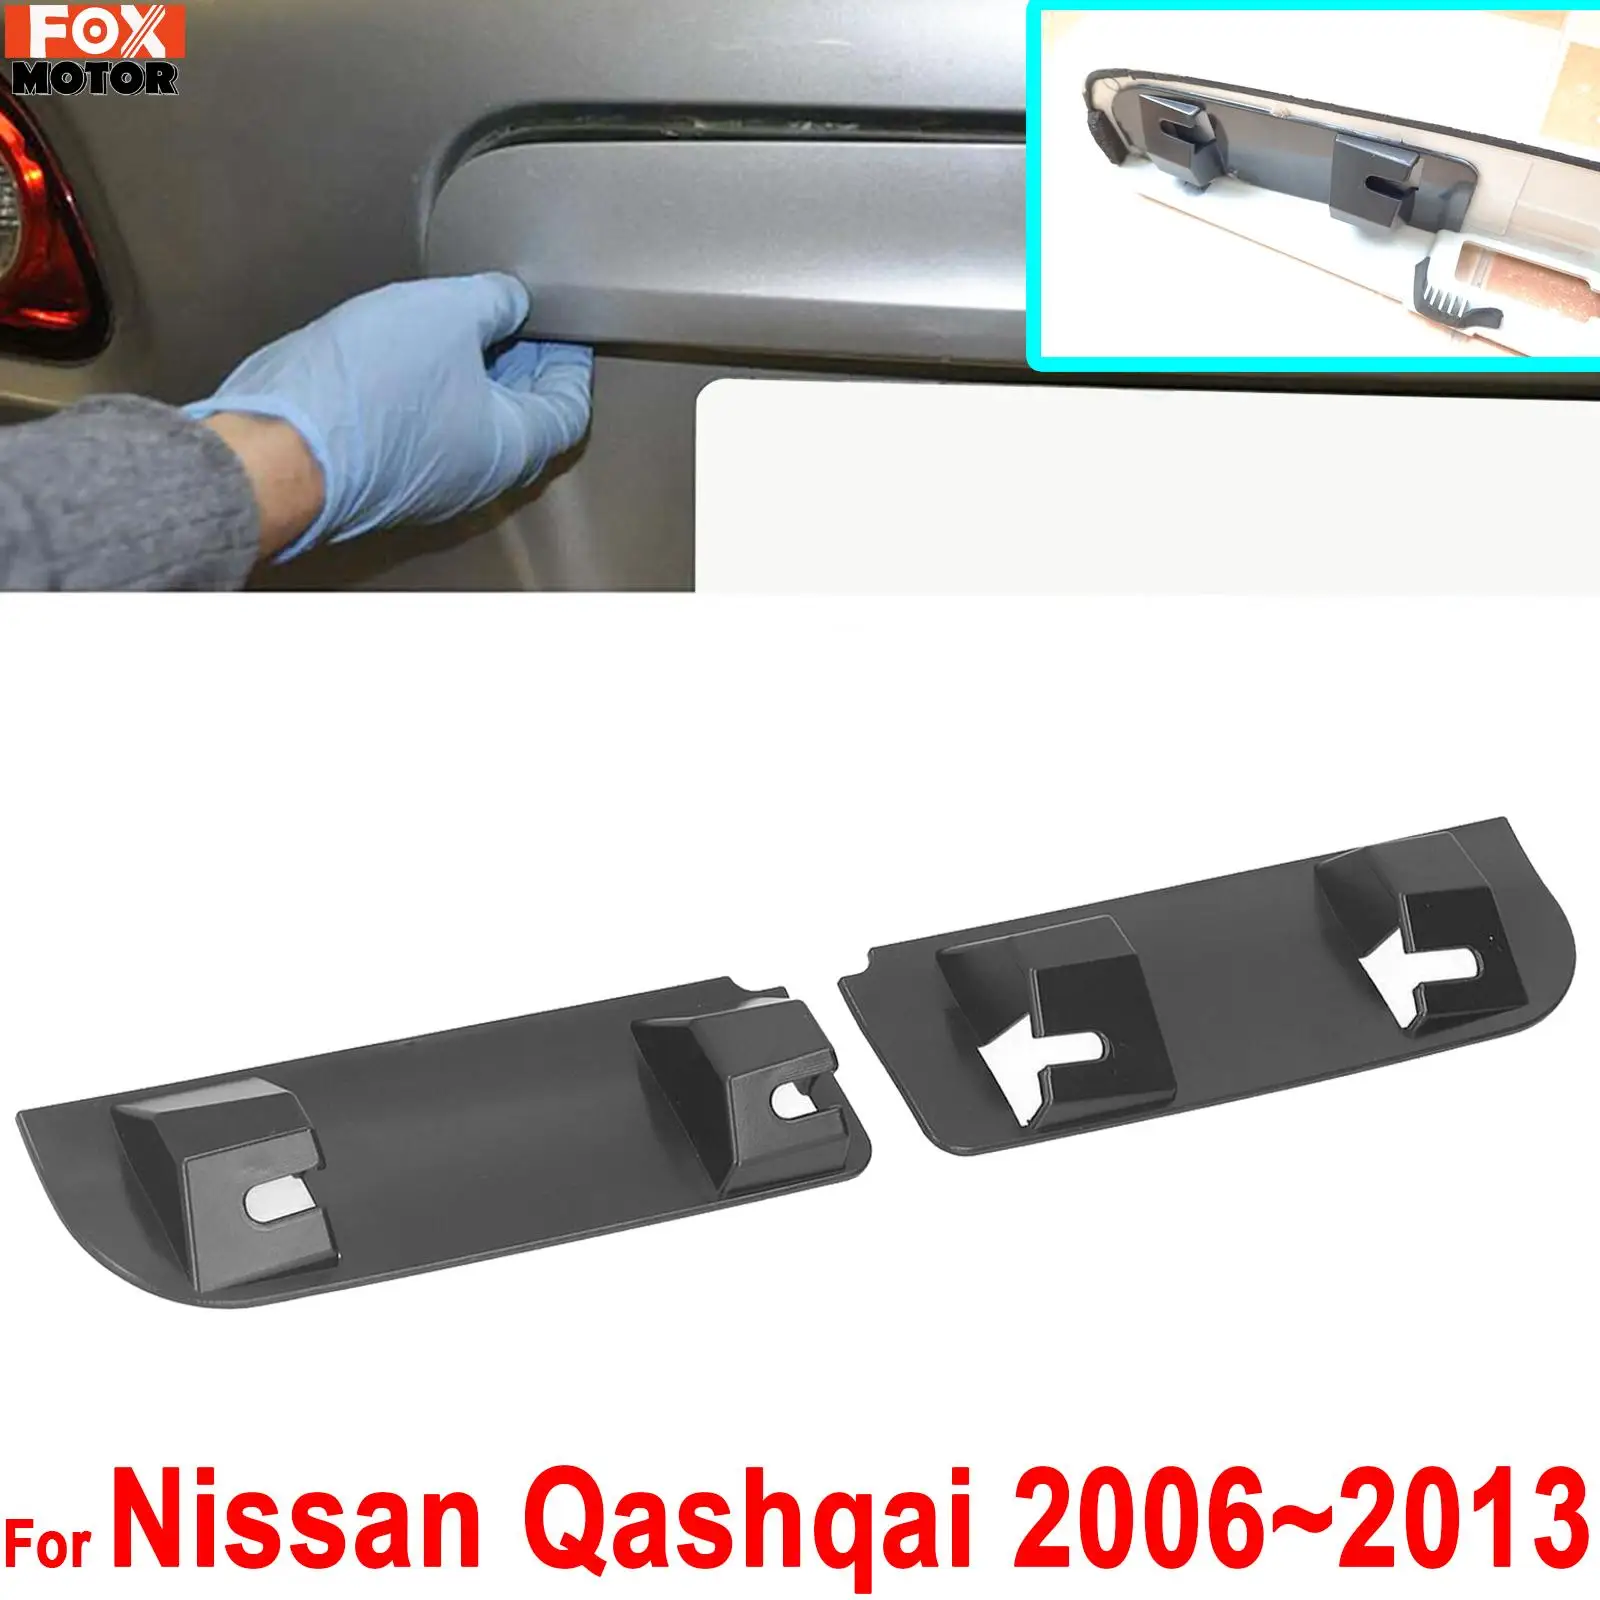 Kit de reparación de manija de maletero para Nissan Qashqai + 2, Clips de Clip para maletero, accesorios de coche, 2006, 2007, 2008, 2009, 2010, 2011, 2012, 2013